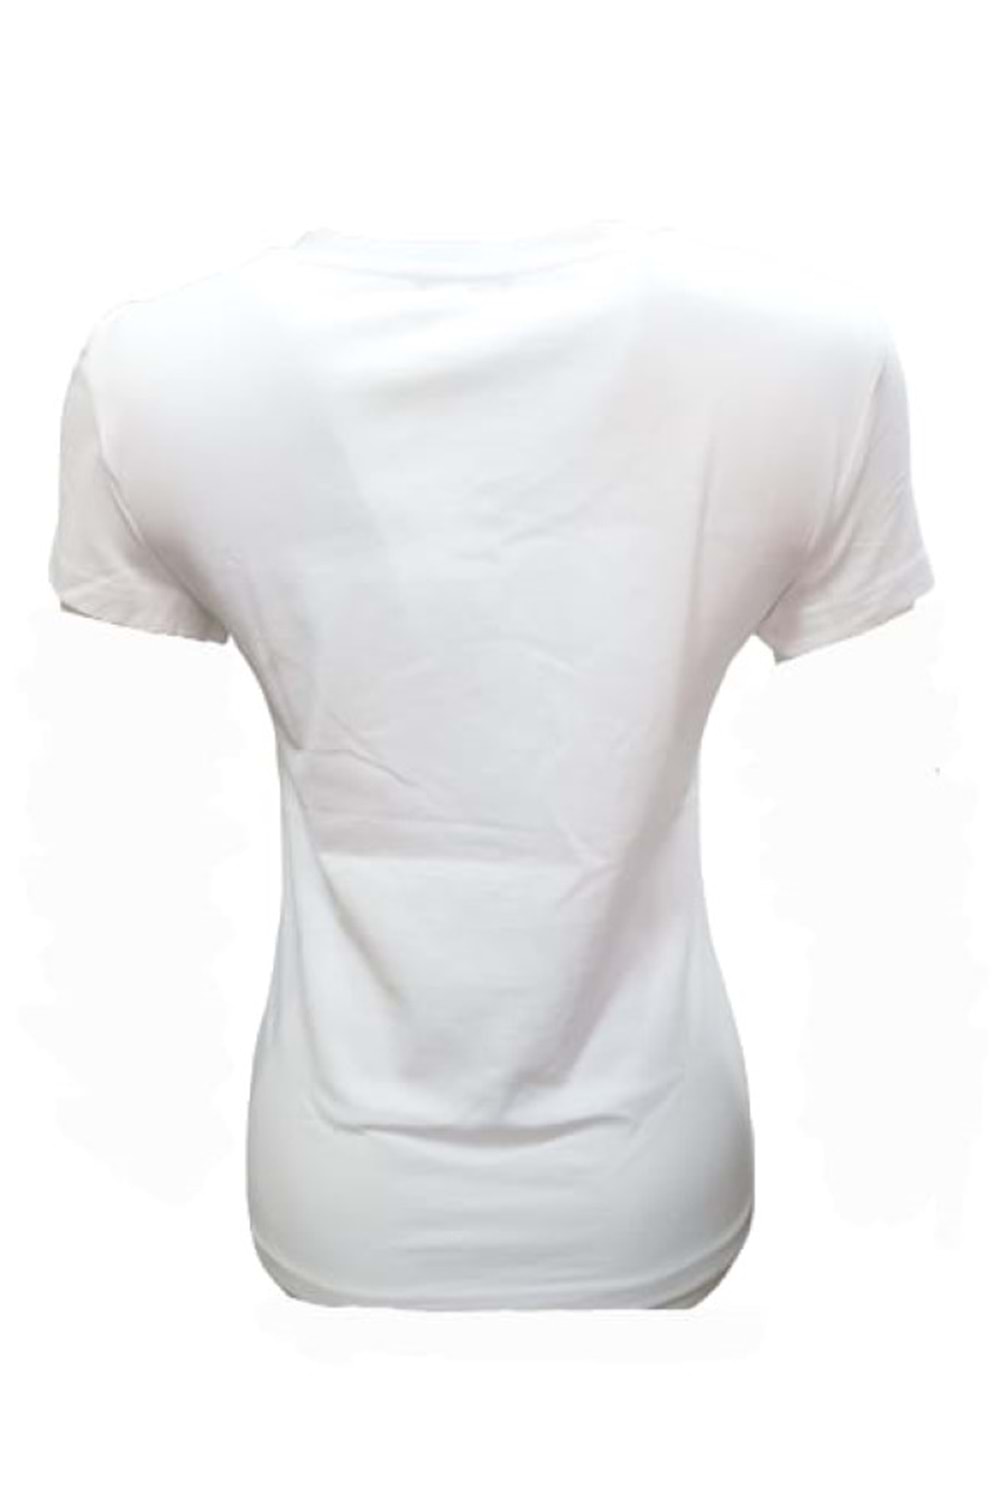 Nike Kadın Kısa Kol V Yaka T-shirt 22502 - Beyaz - XL